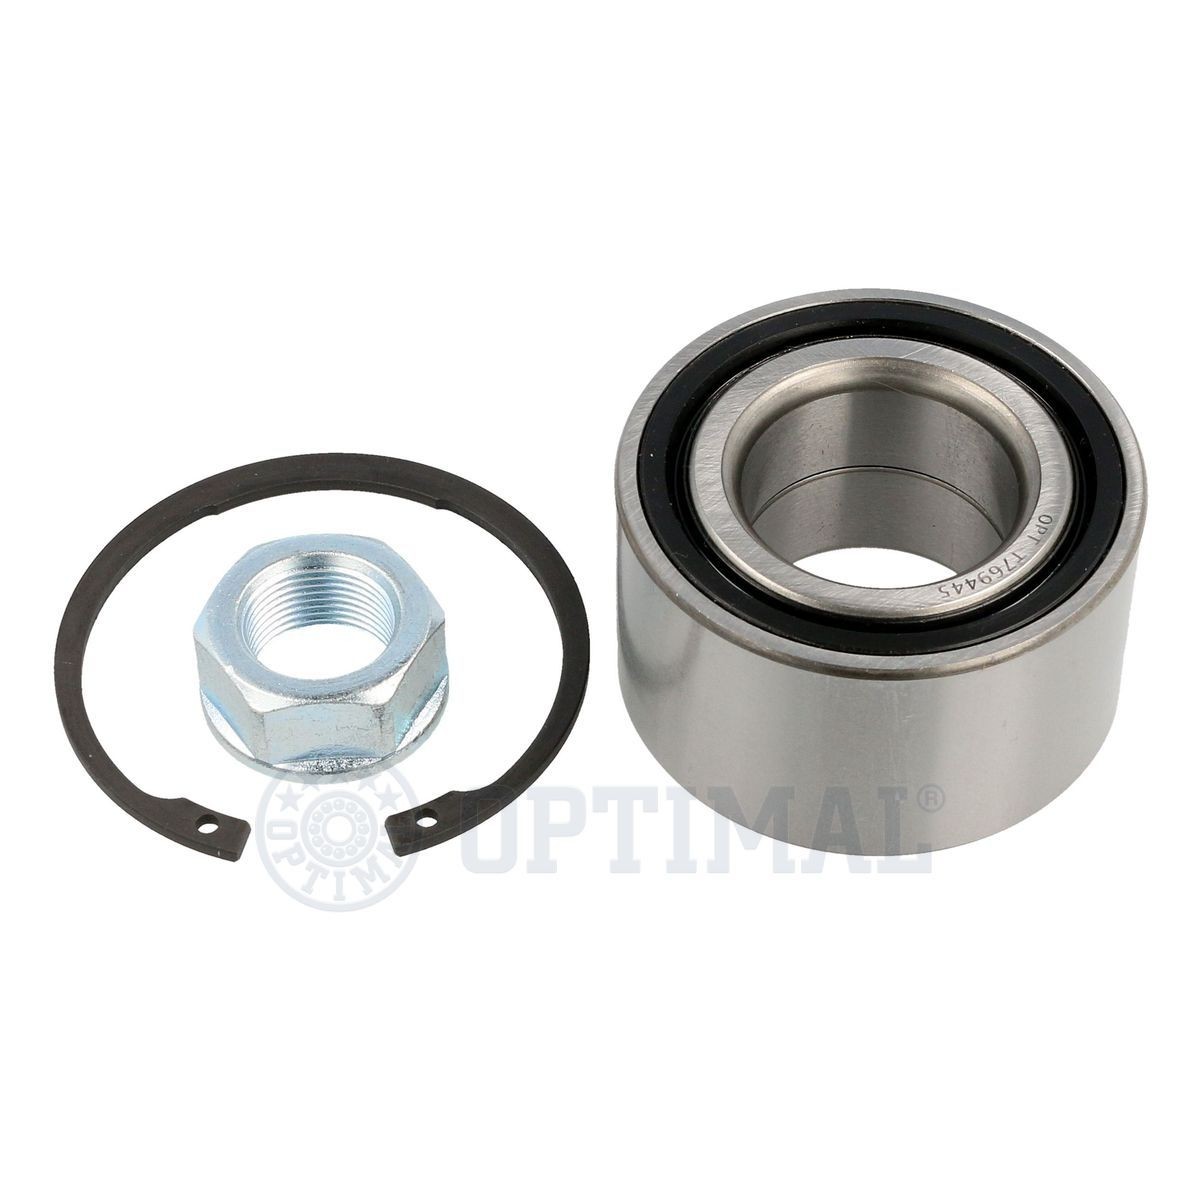 OPTIMAL 912527 Wheel bearing kit with integrated magnetic sensor ring, 73 mm